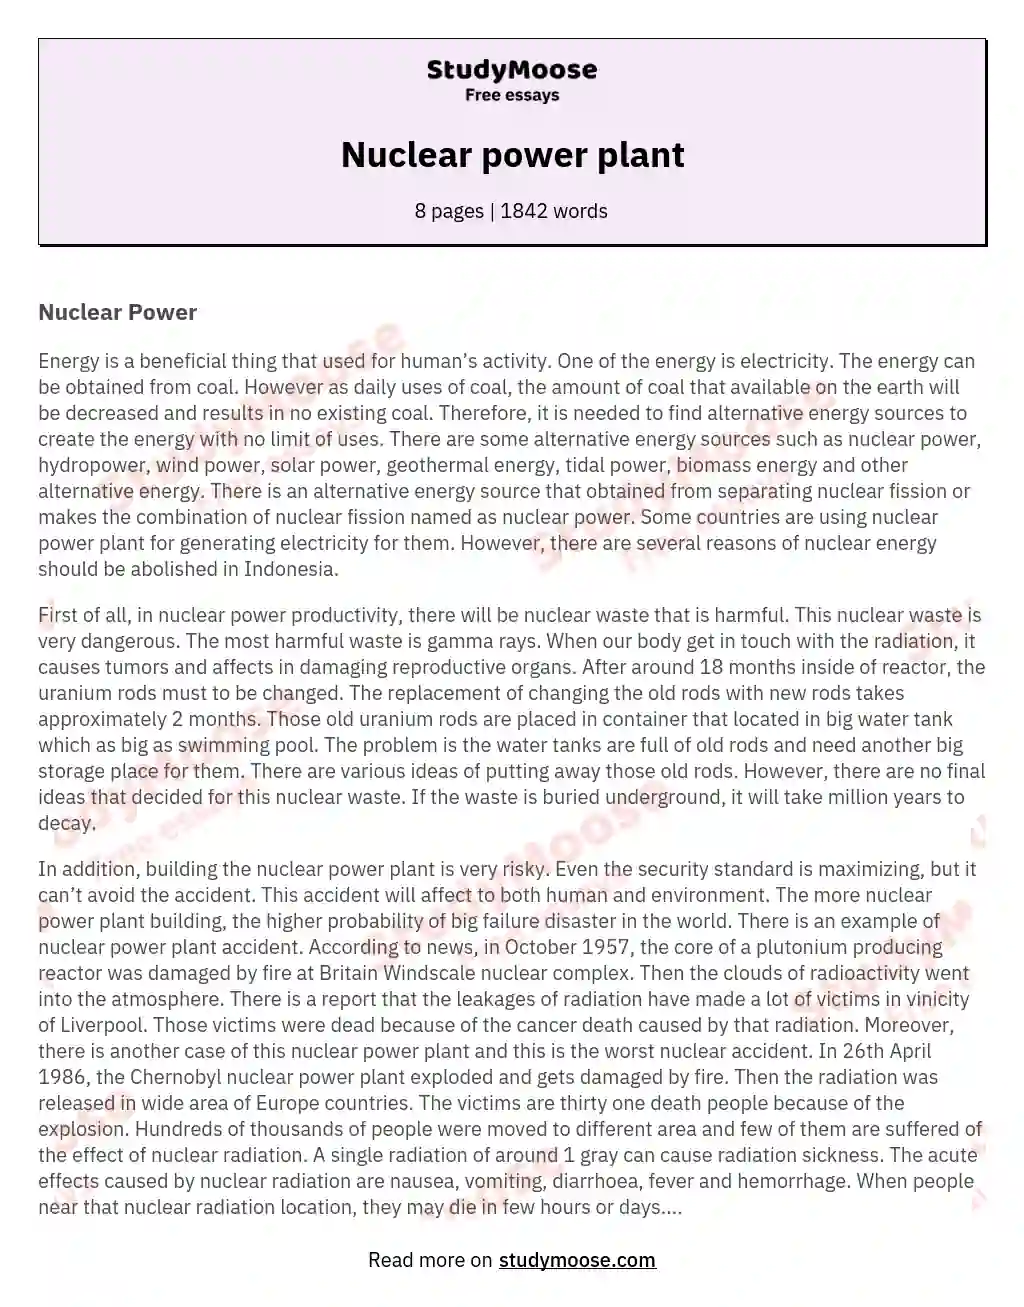 Nuclear power plant essay